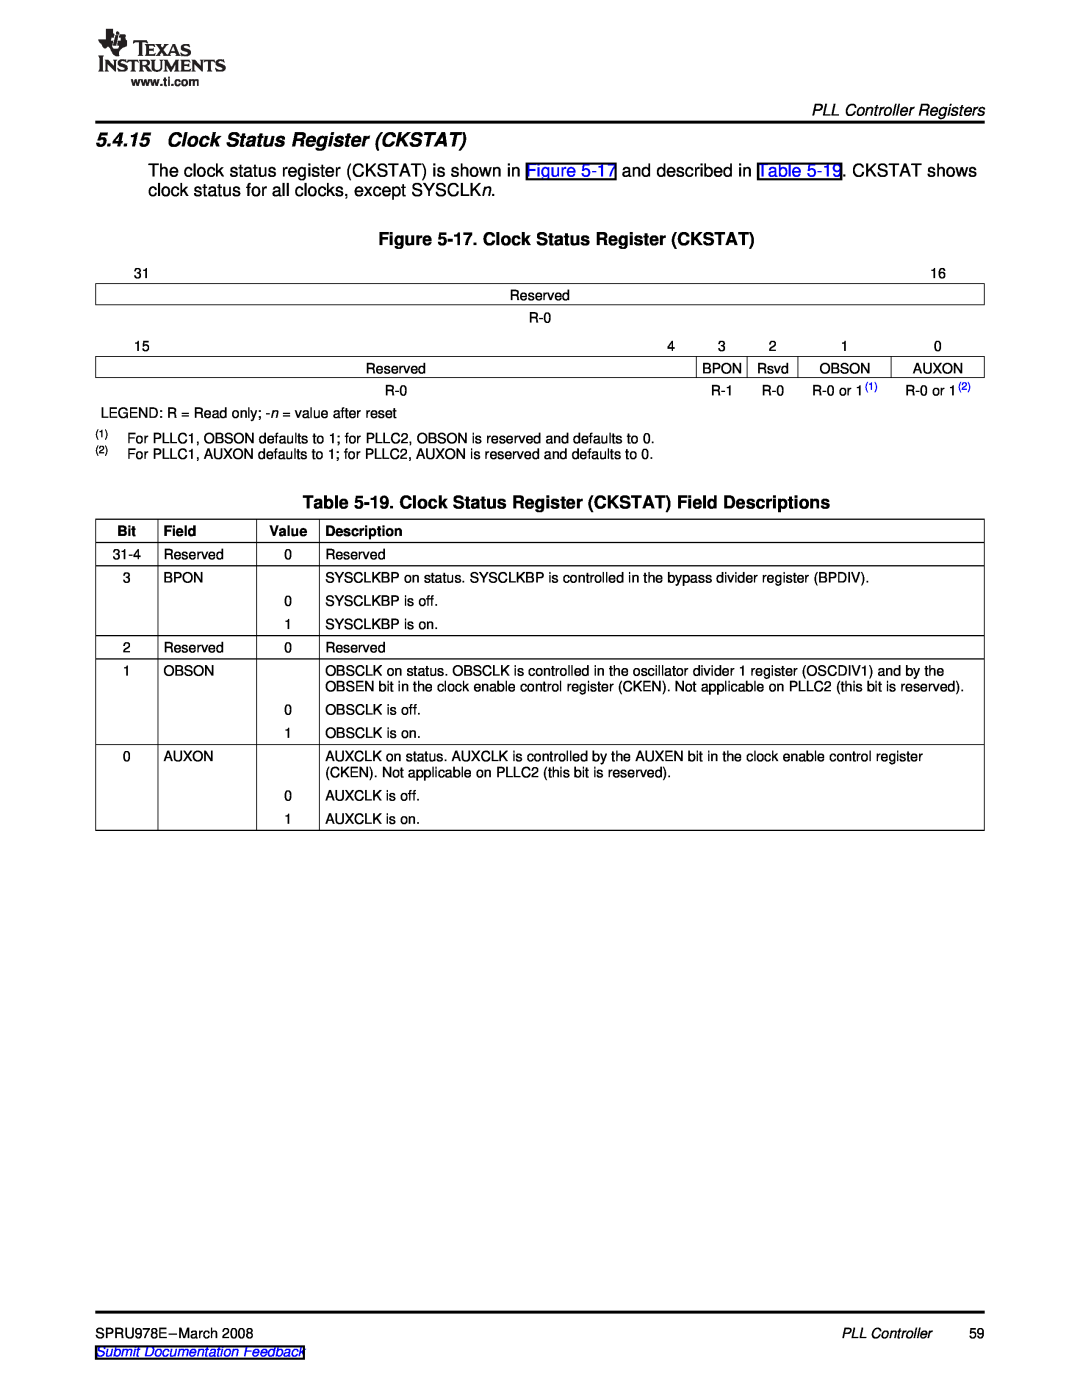 Texas Instruments TMS320DM643x 17. Clock Status Register CKSTAT, 19. Clock Status Register CKSTAT Field Descriptions 